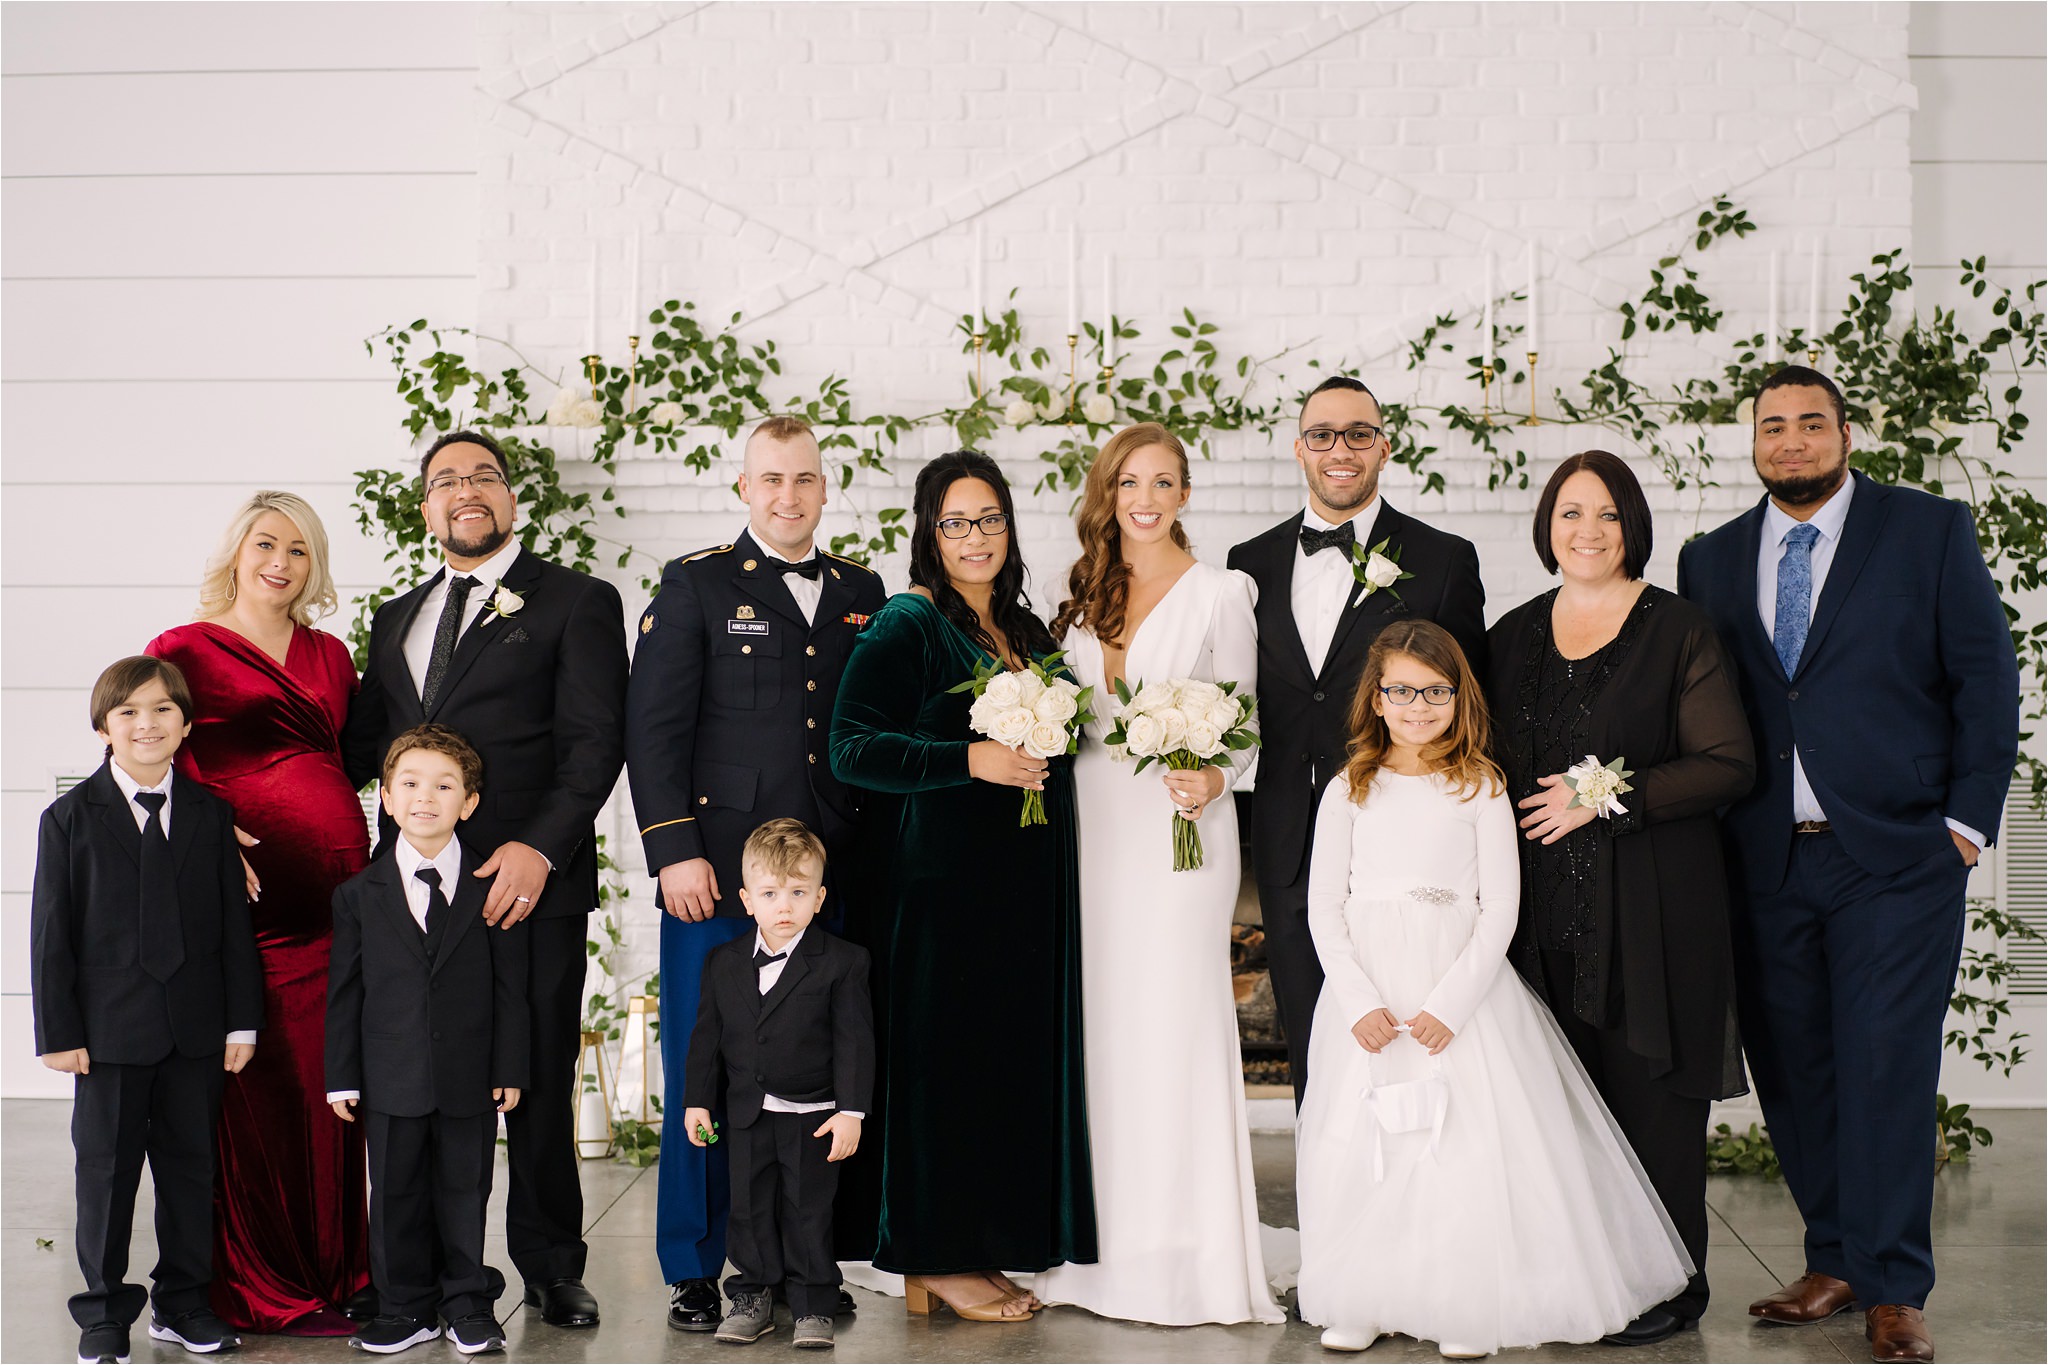 Wedding family photos by Laural Alpizar Photography, Minneapolis wedding photographer